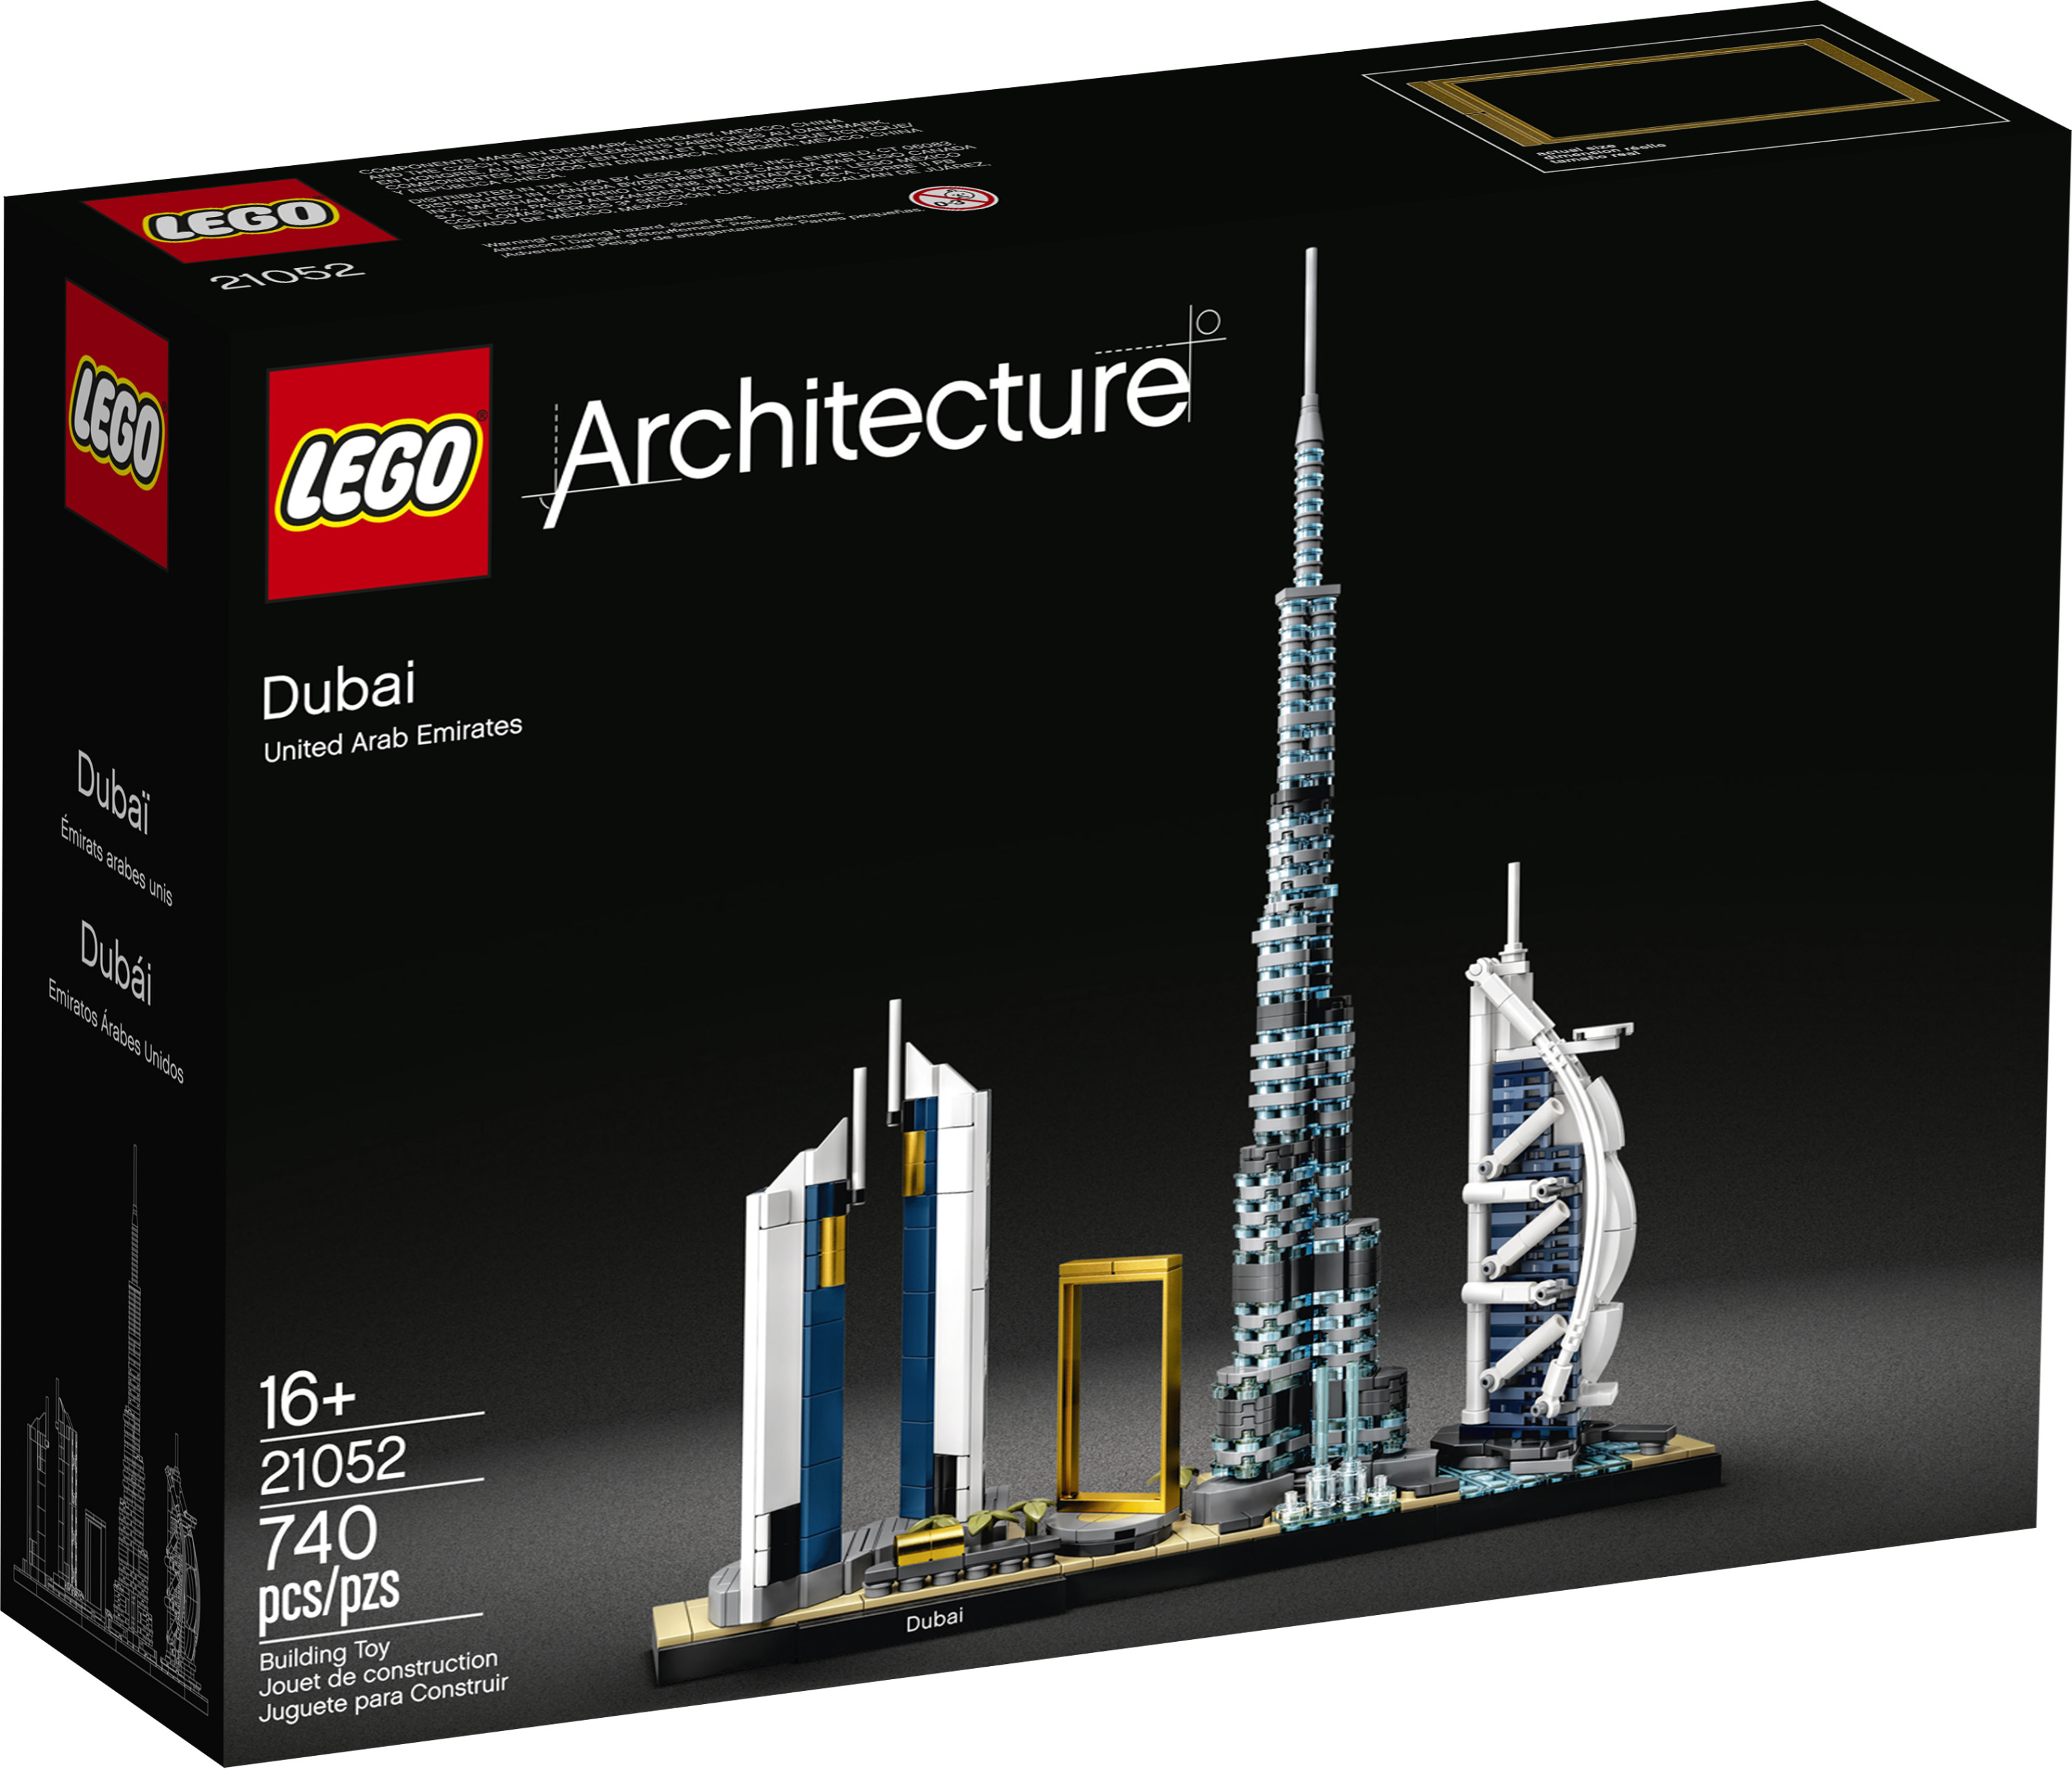 LEGO Dubai 21052 Building Set (740 Pieces) - image 4 of 5